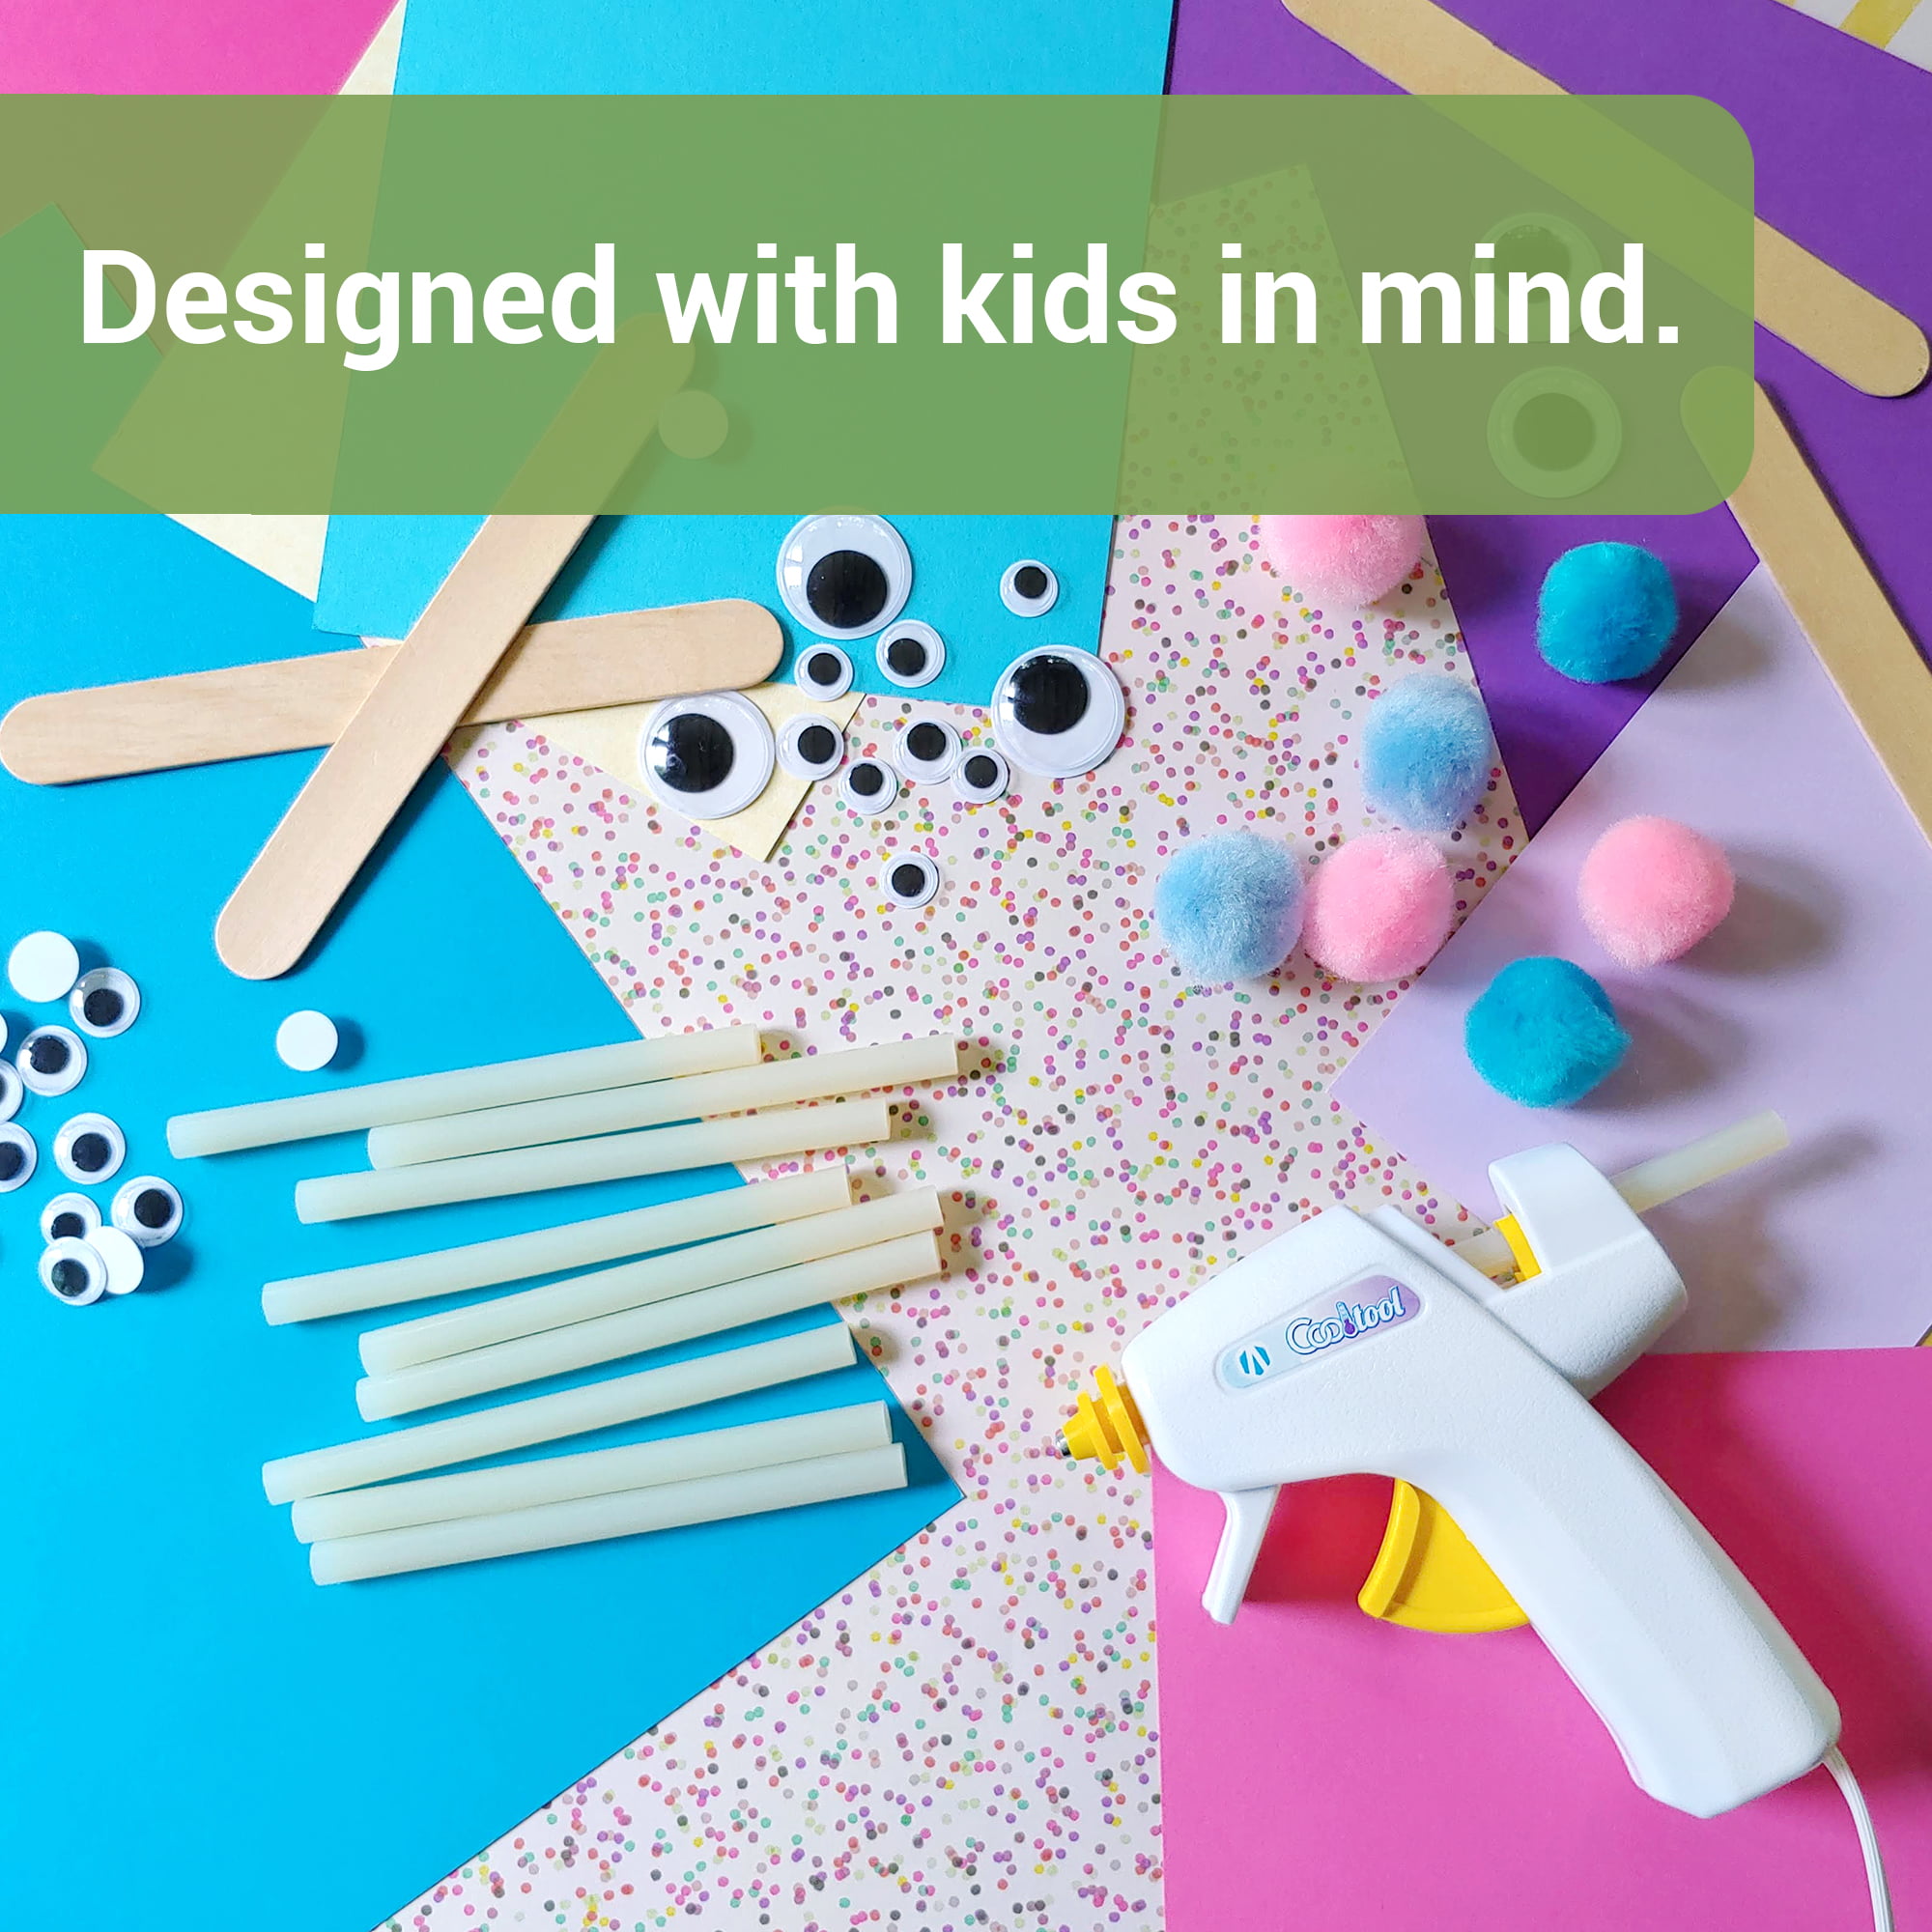  AdTech Ultra Low-Temp Cool Tool, Mini Hot Glue Gun for Safe  Crafting, Children and Kids